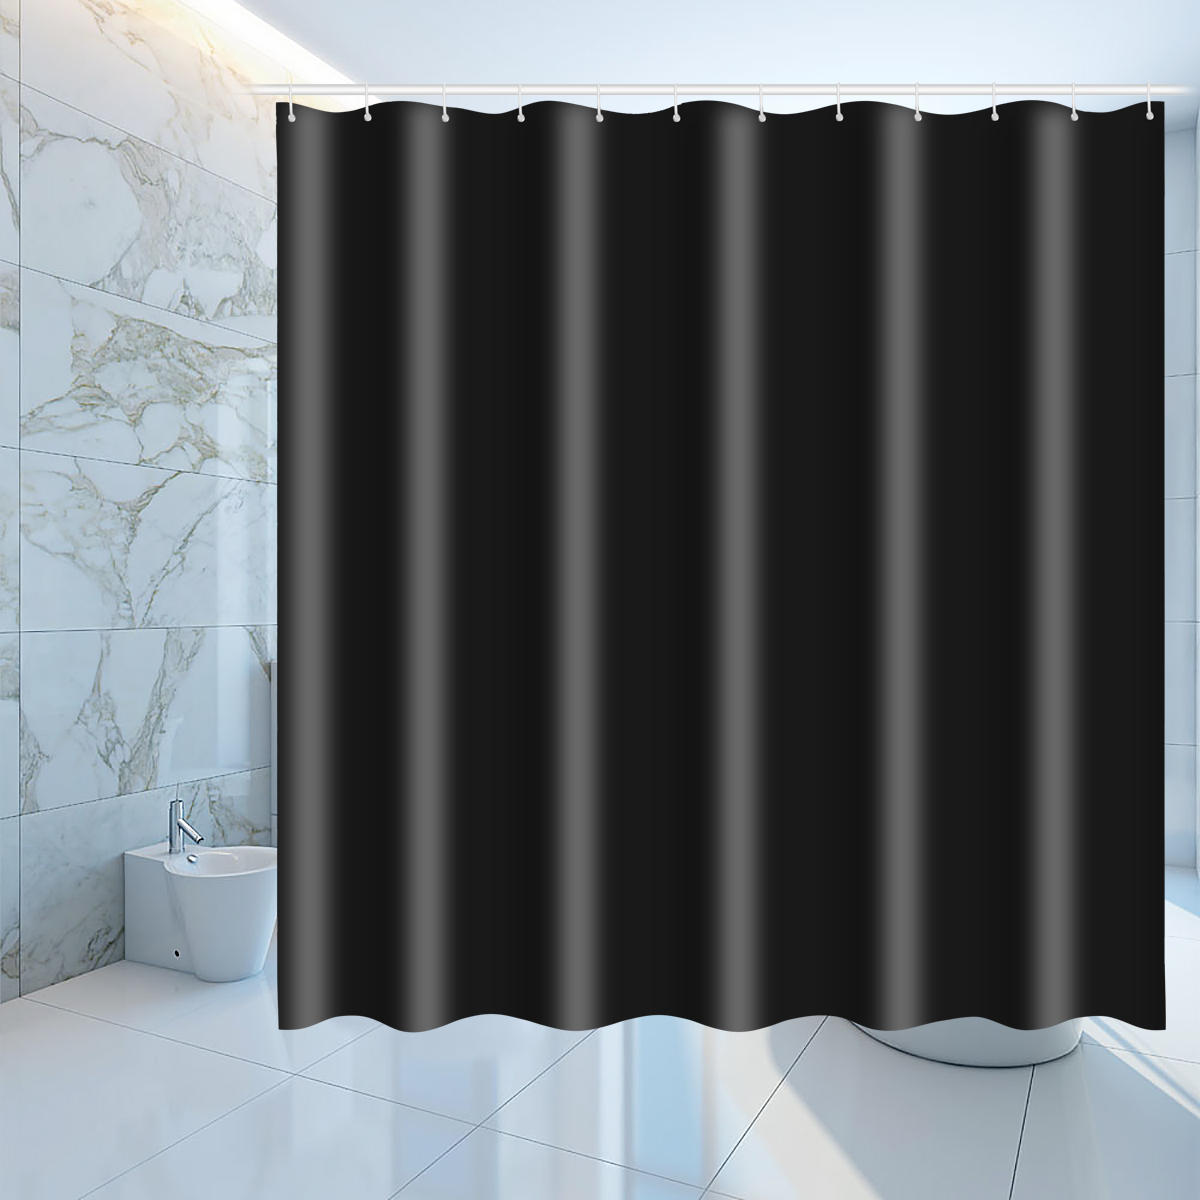 waterproof curtain for bathroom shower window